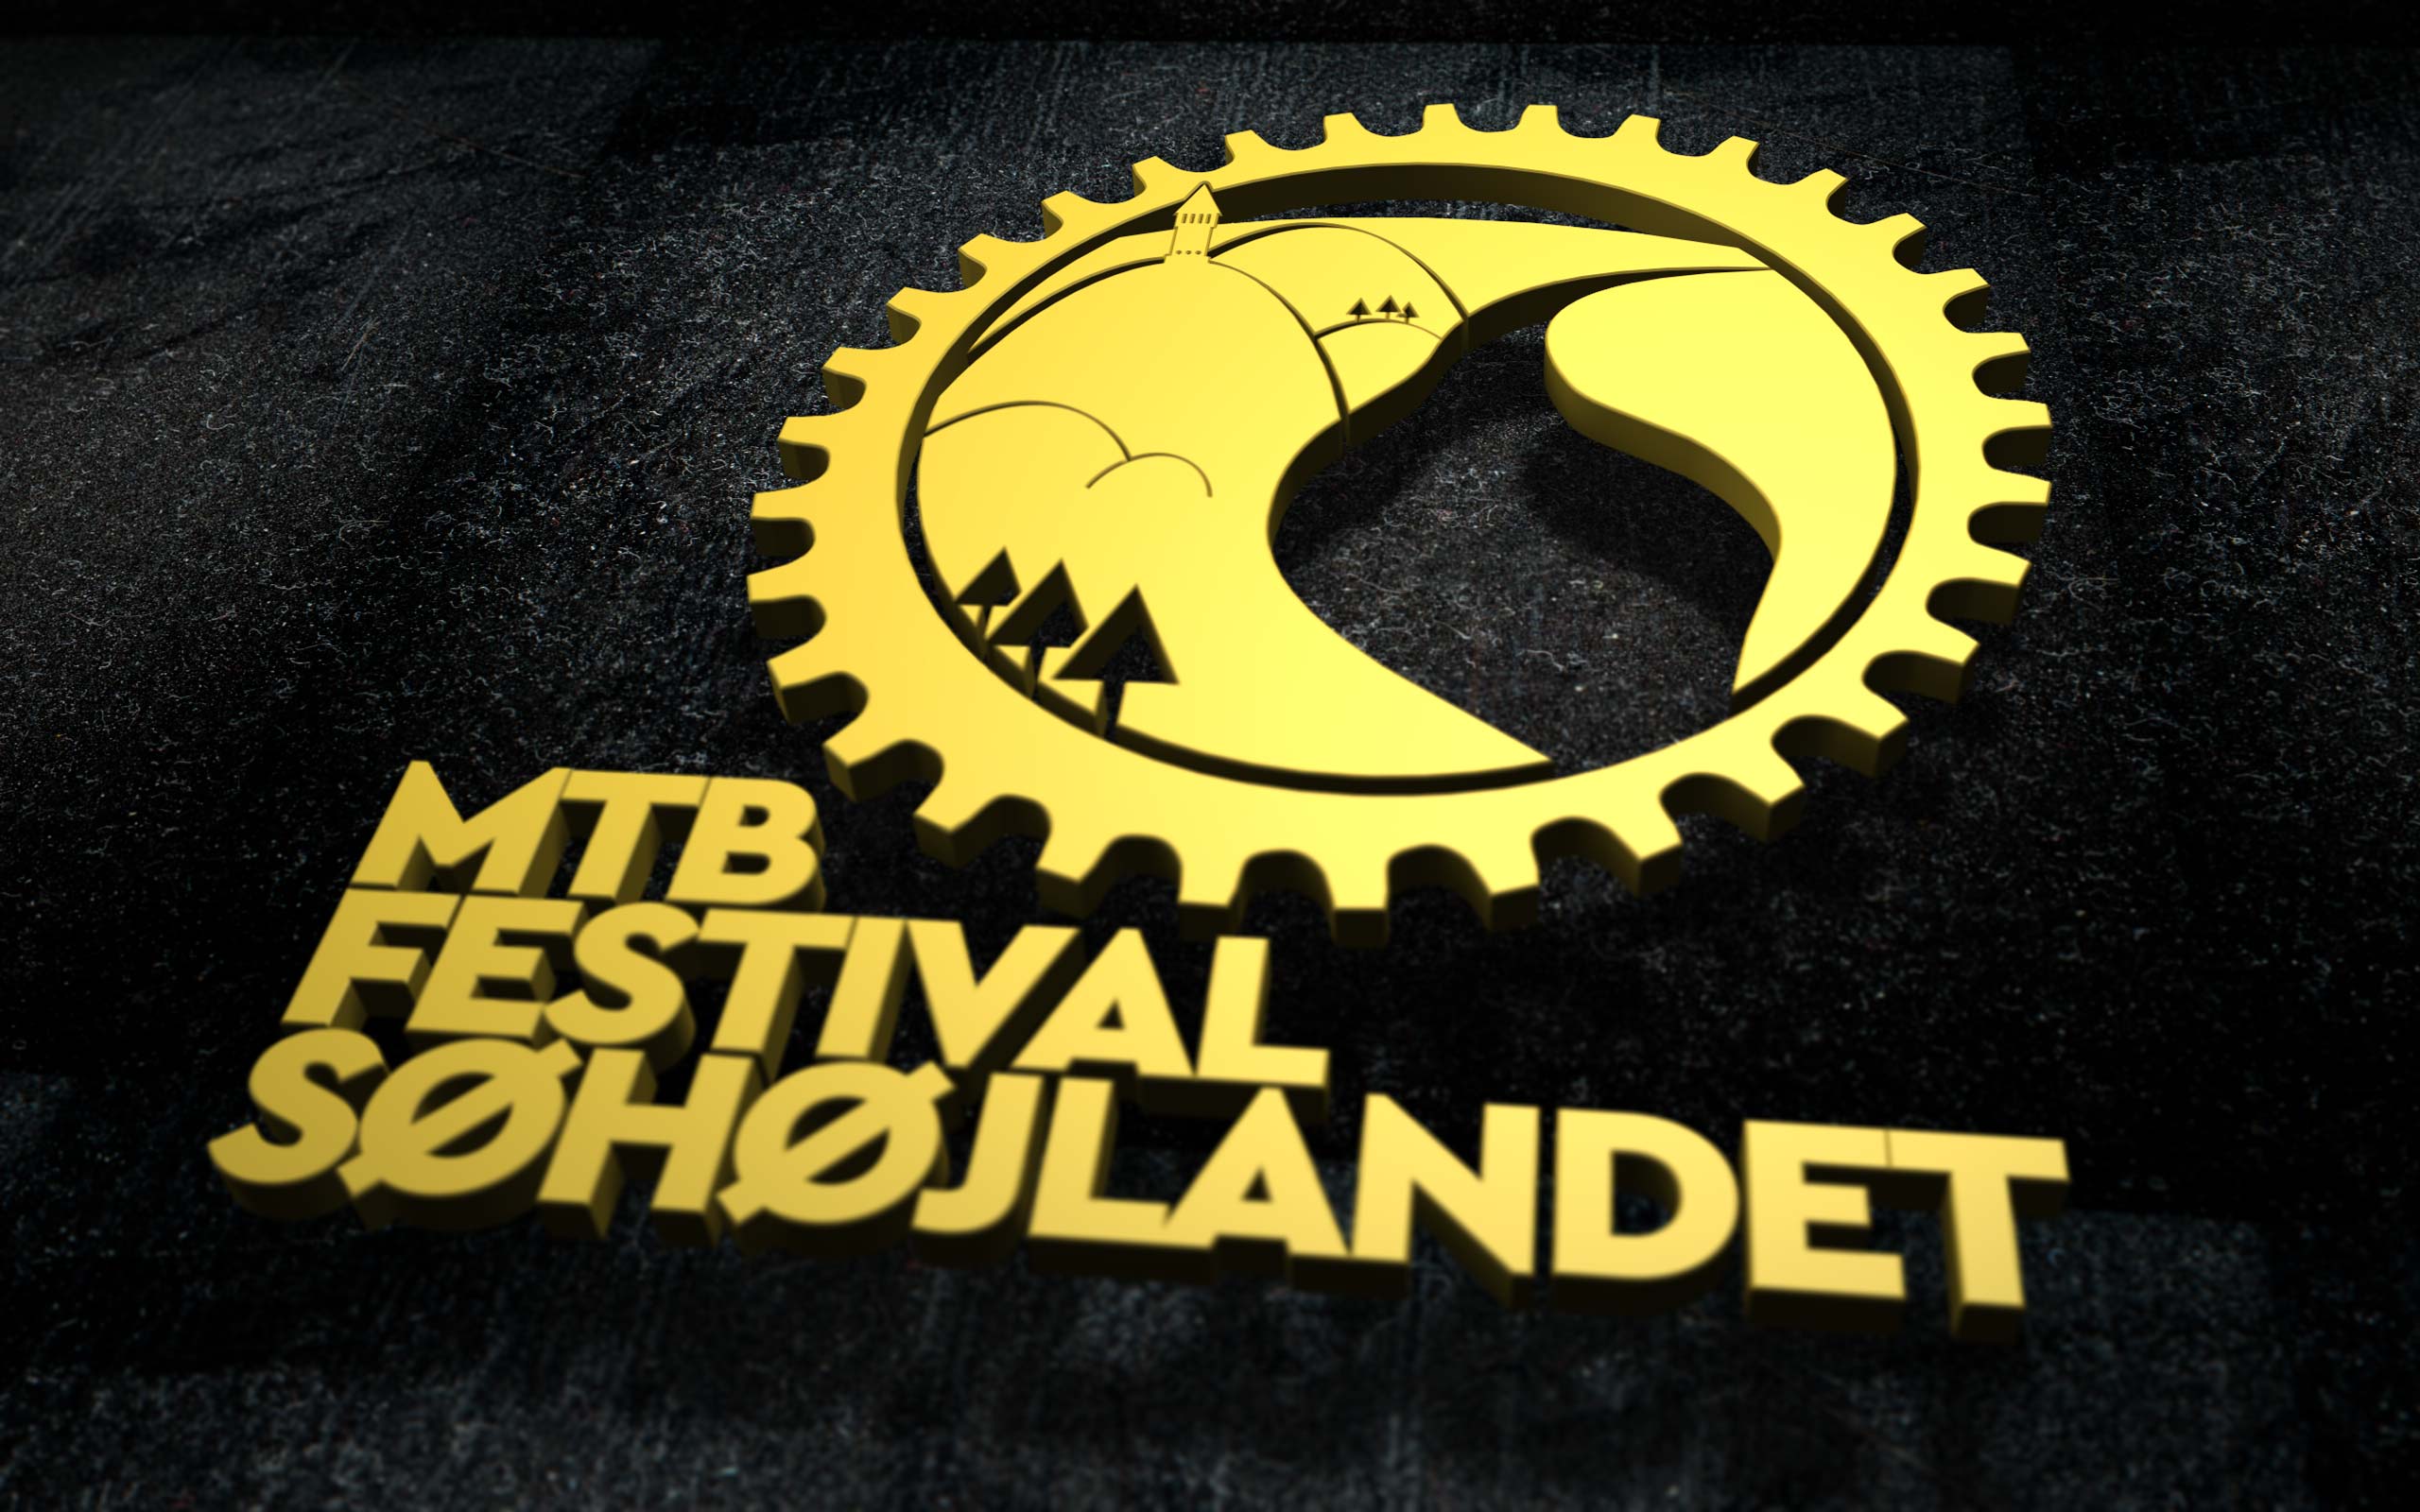 MTB Festival Søhøj­landet